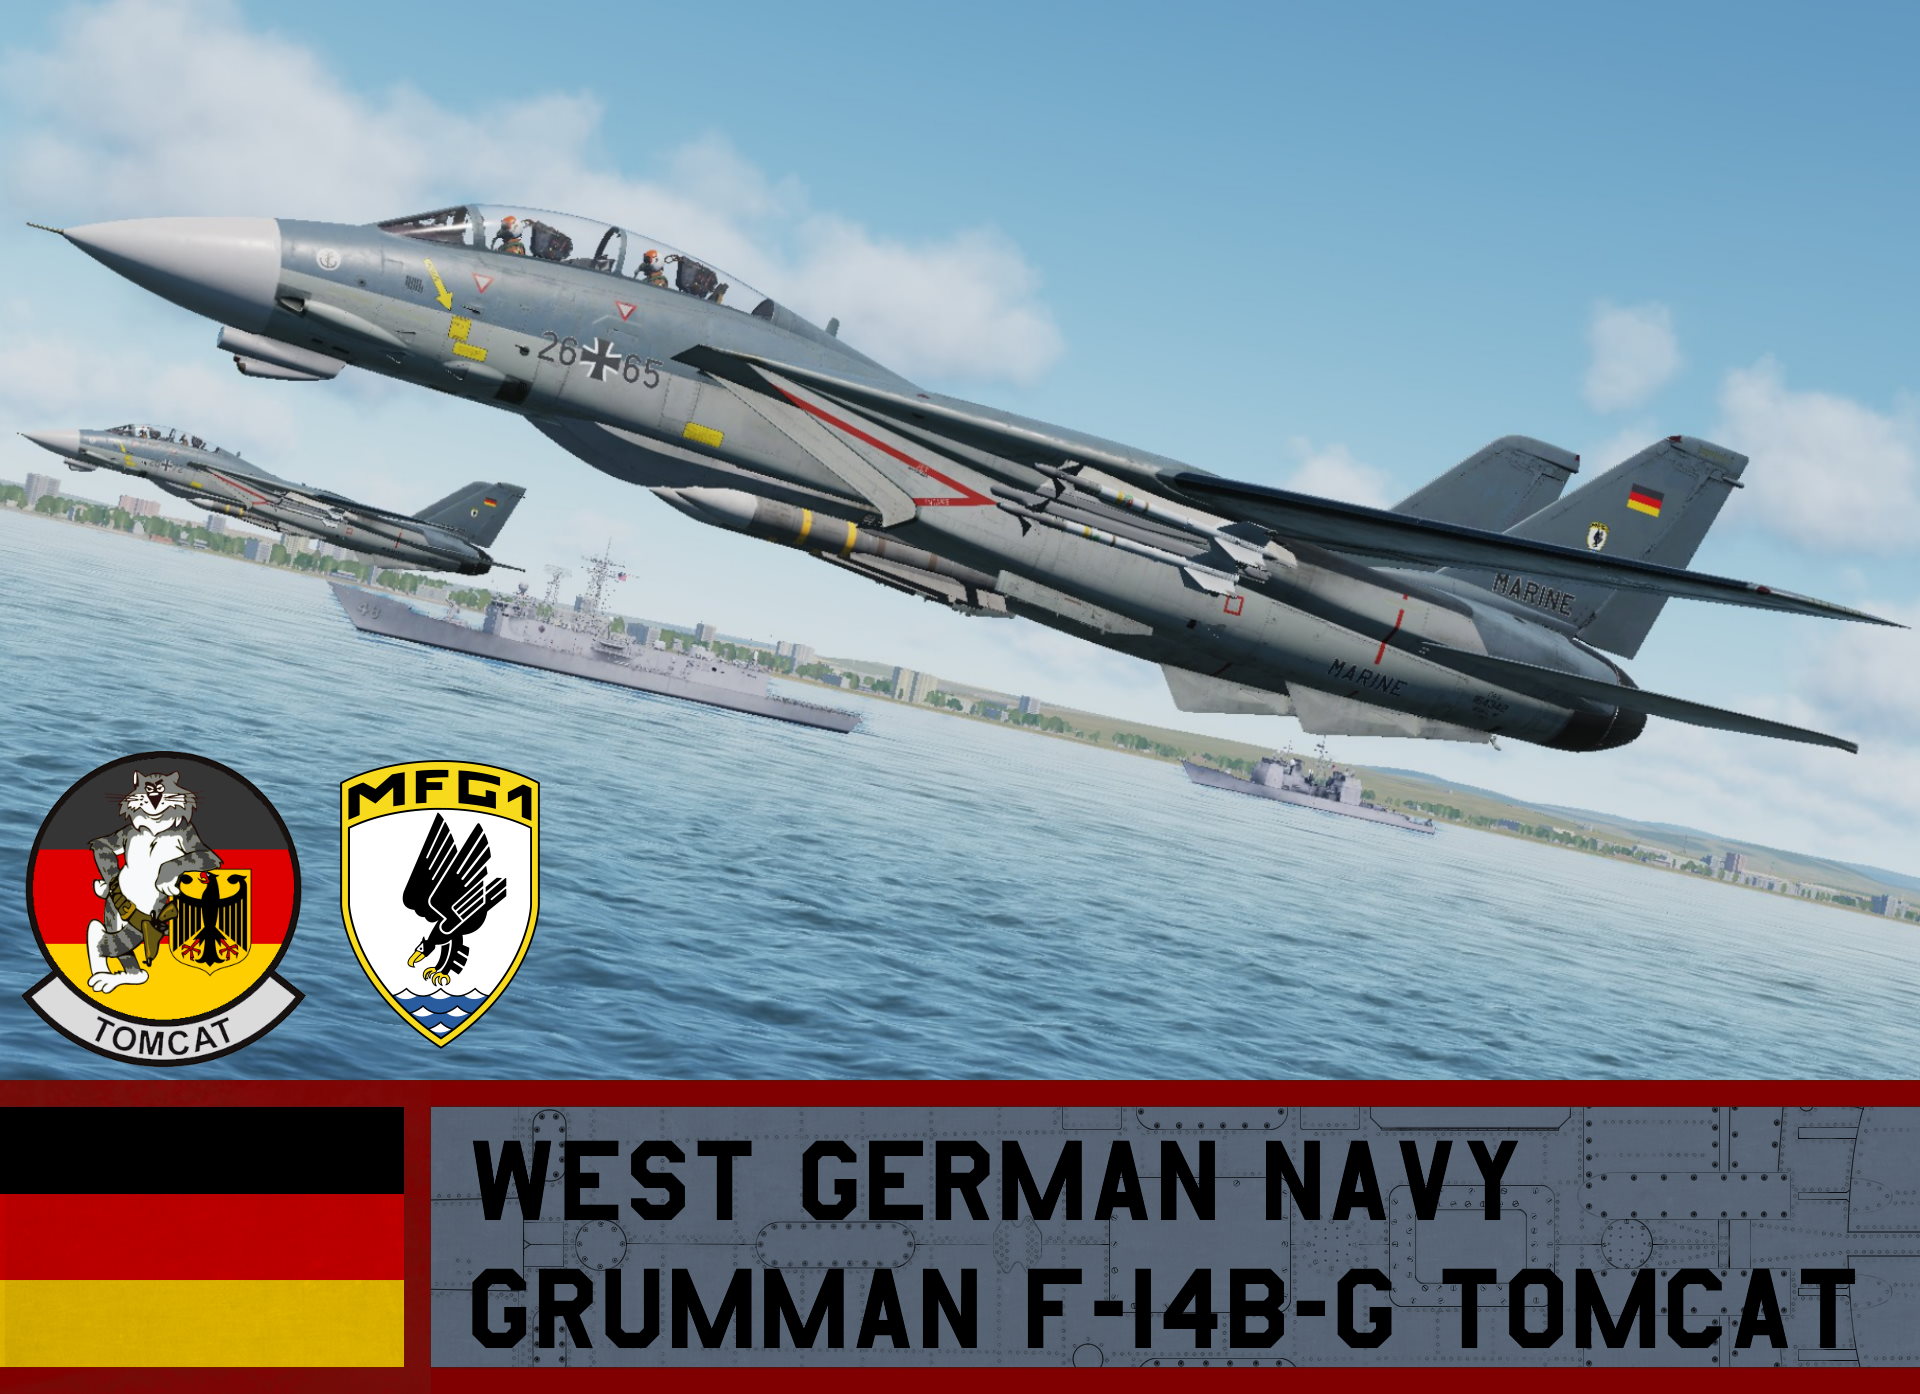 West German Naval Air Arm F-14B-G Tomcat (Fictional)